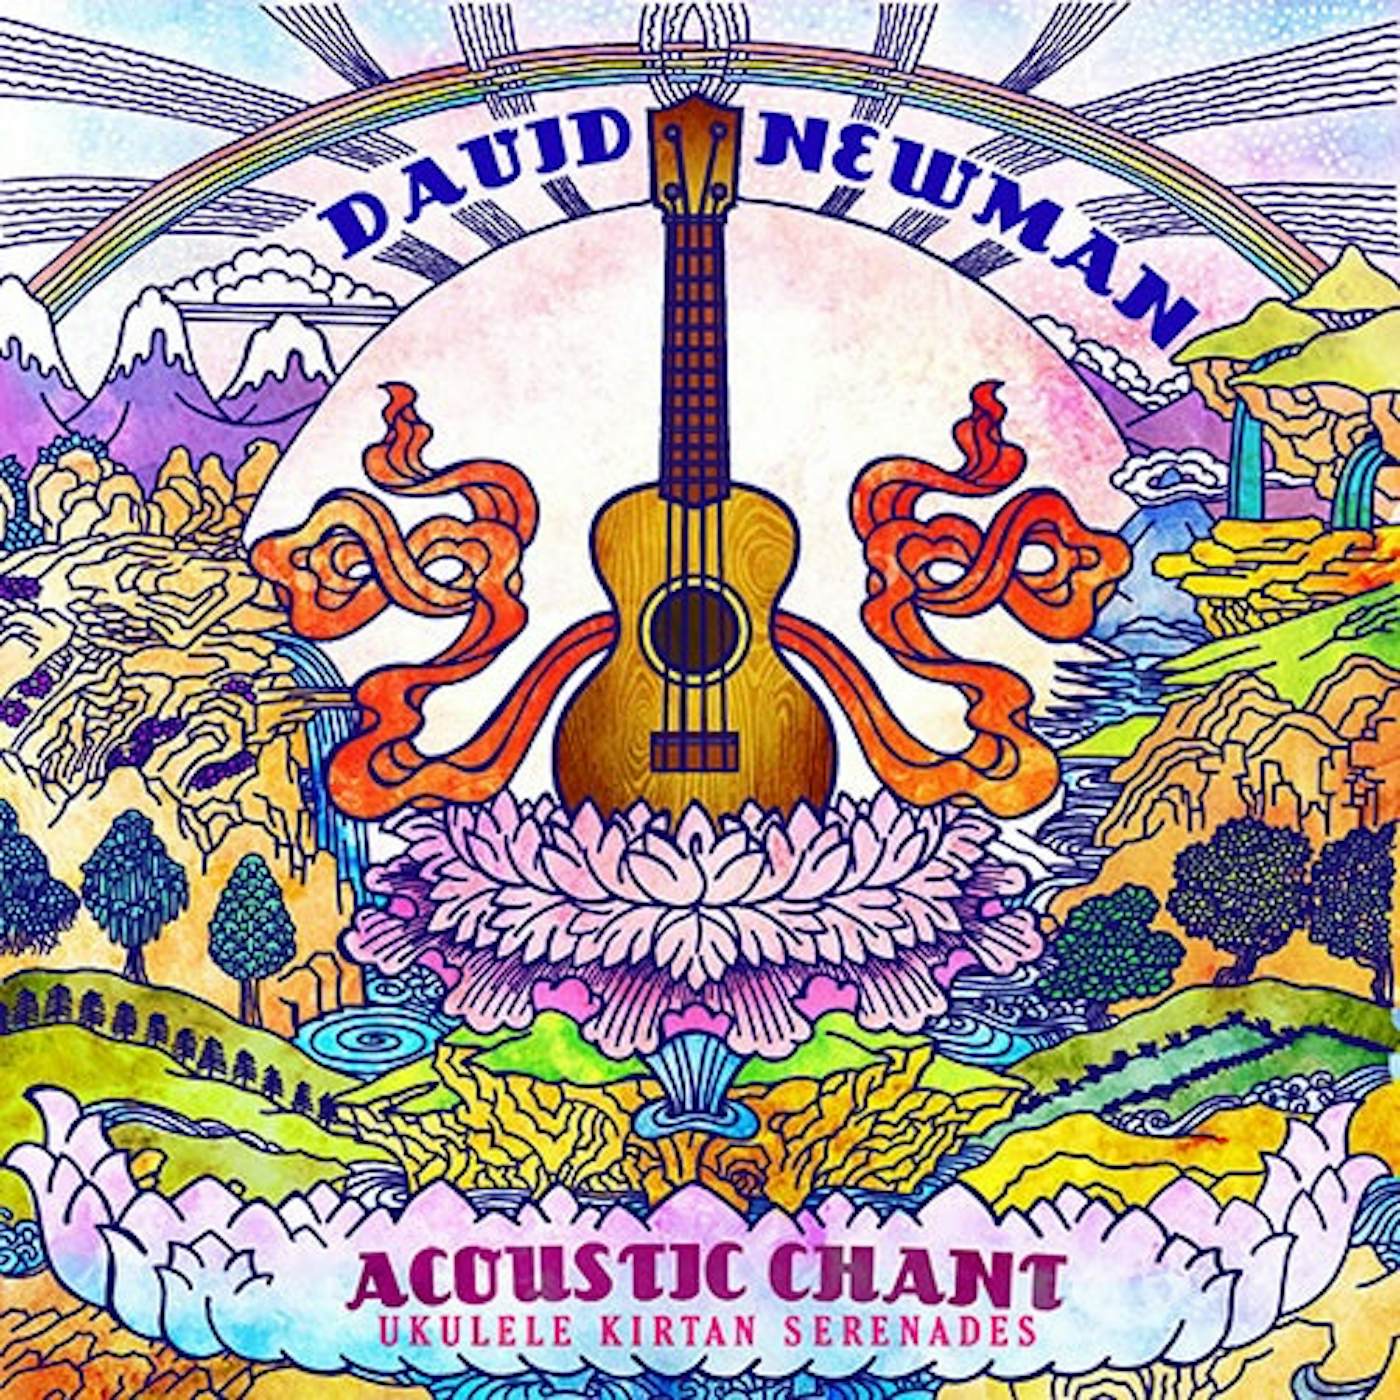 David Newman ACOUSTIC CHANT: UKULELE KIRTAN SERENADES CD